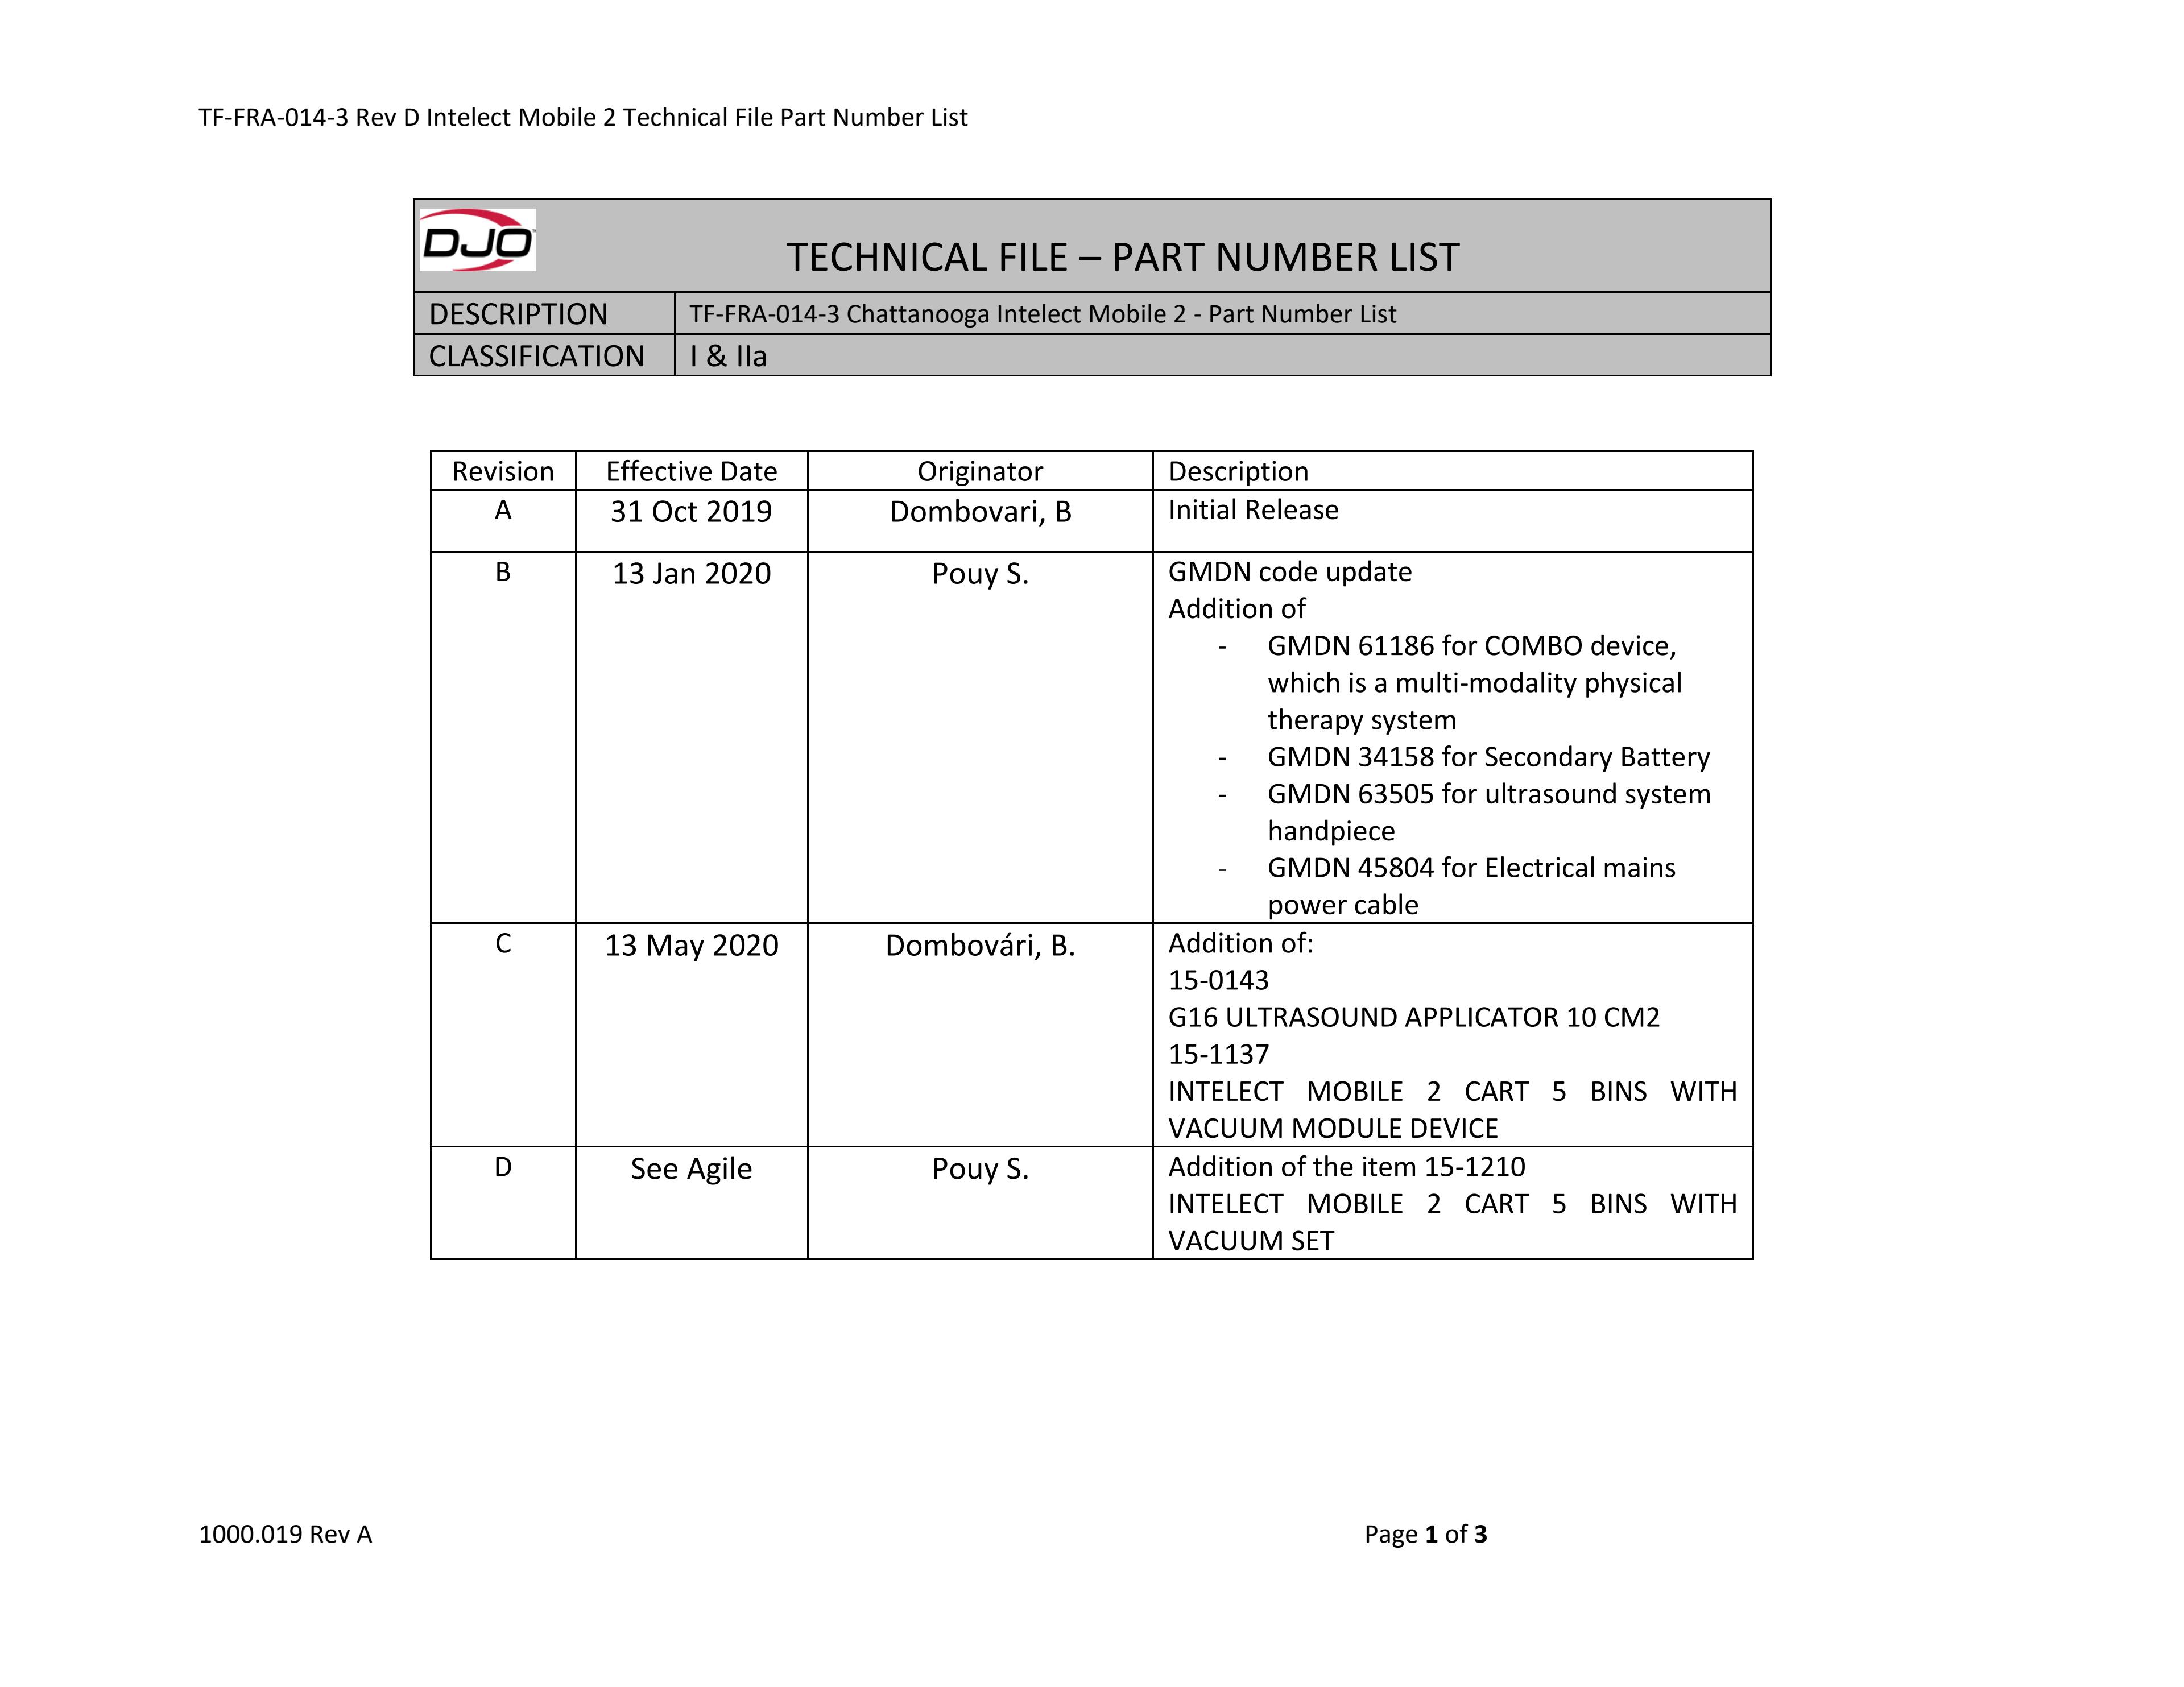 TF-FRA-014-3 Rev D - Intelect Mobile 2 Technical File Part Number List.pdf